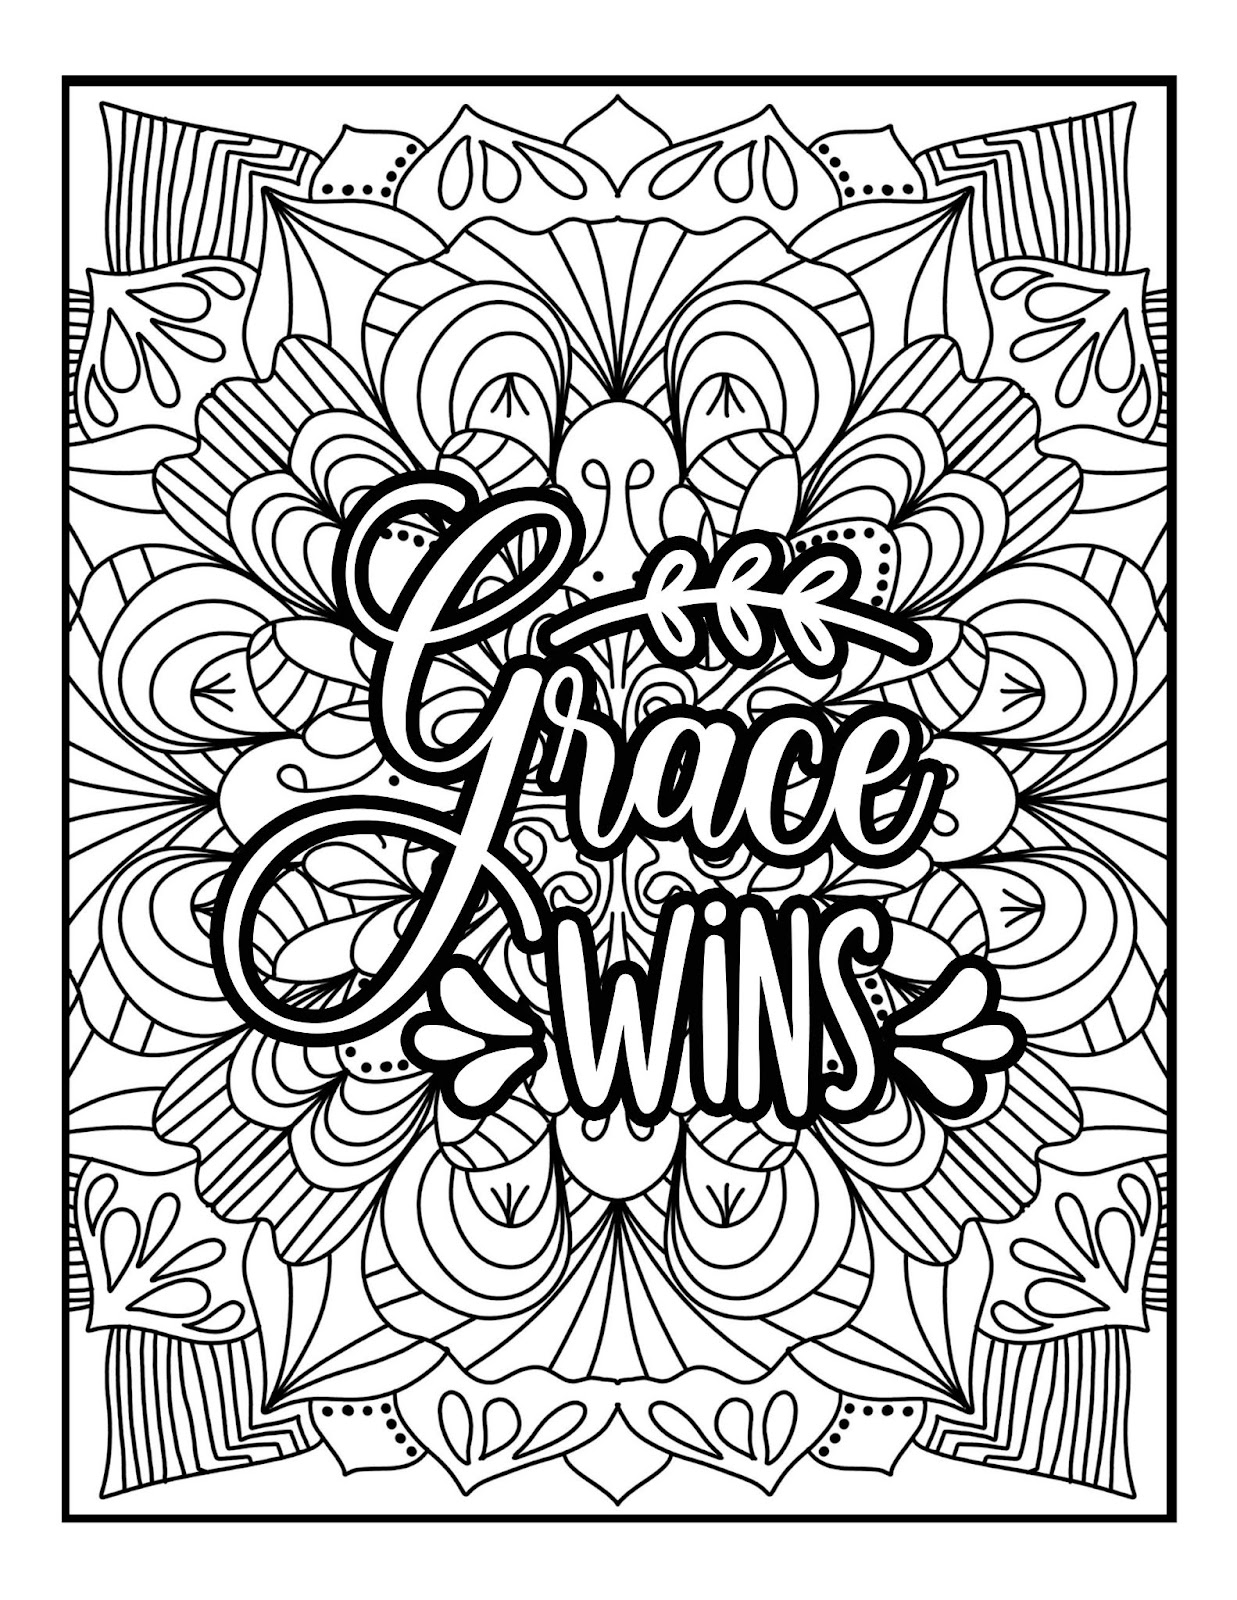 Grace wins coloring page